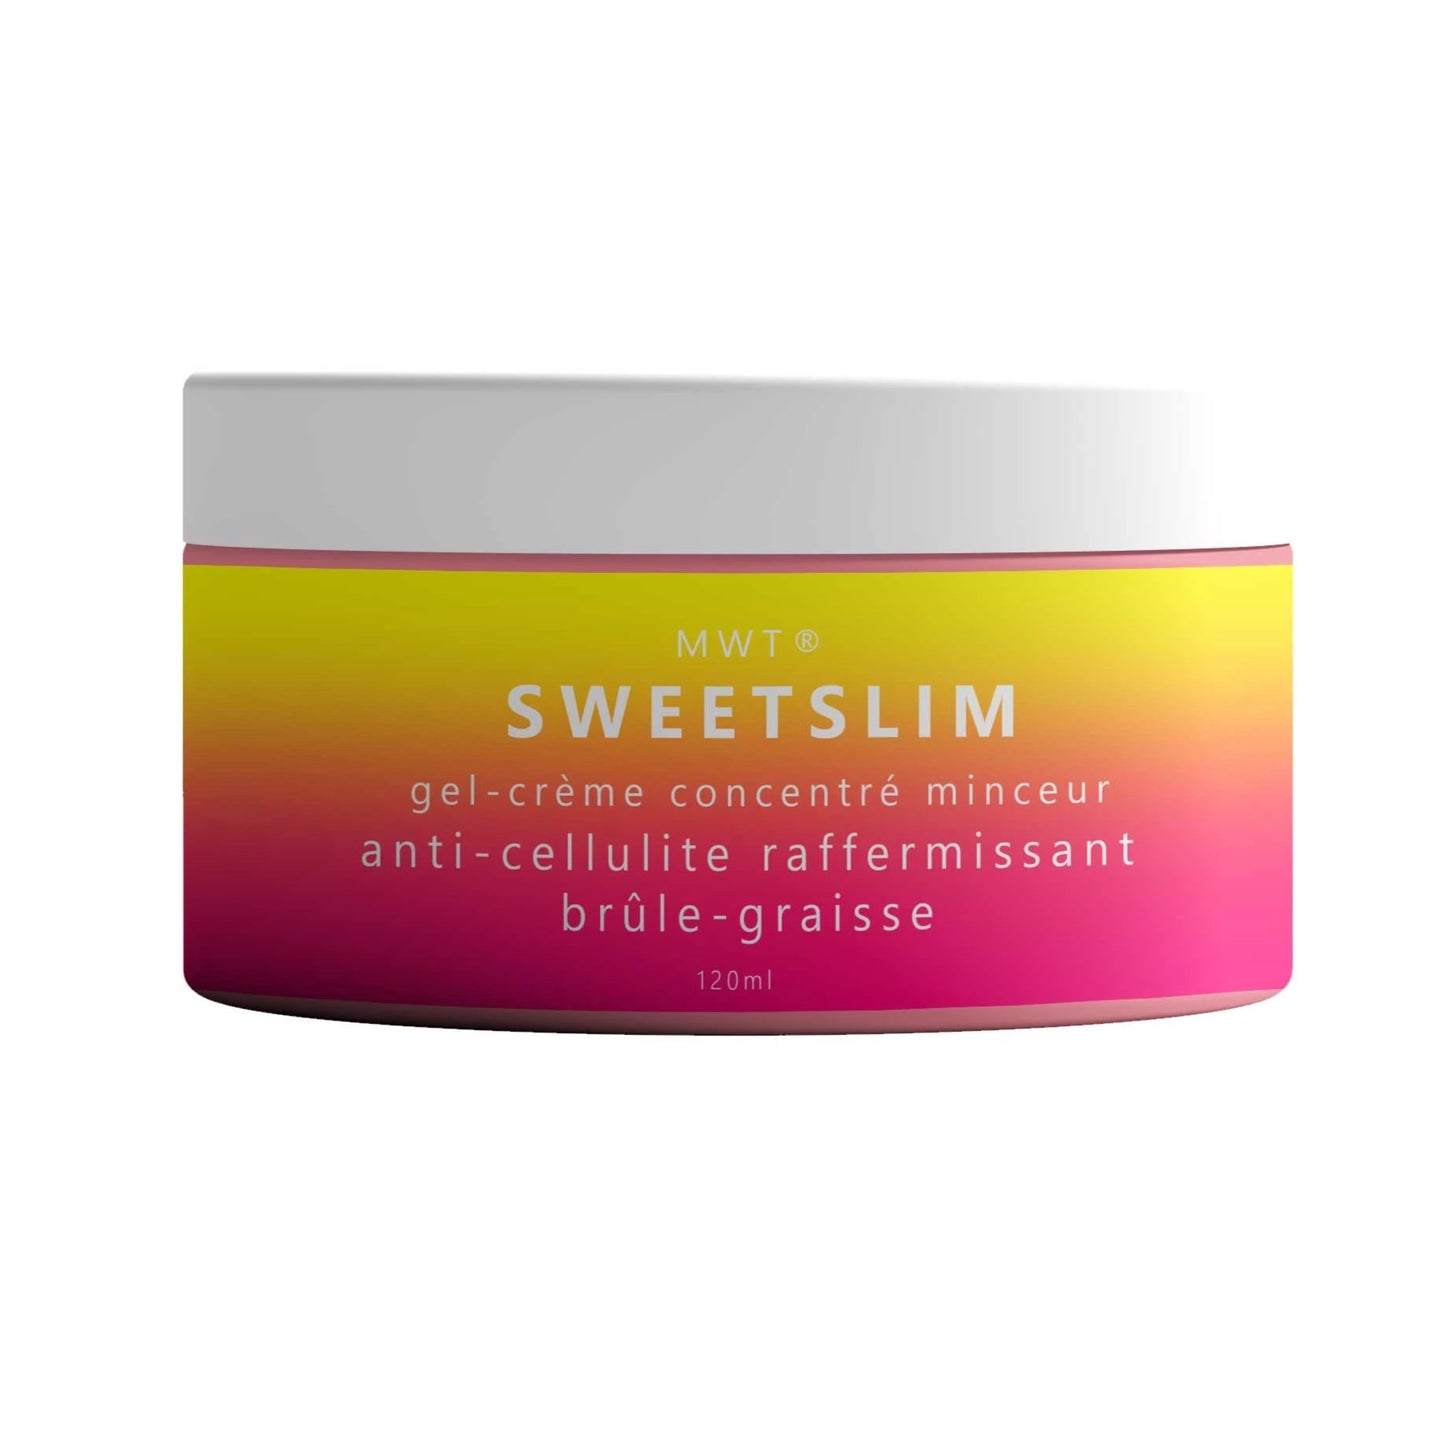 Gel-crème minceur anticellulite Sweet slim - MWT® Gaine minceur